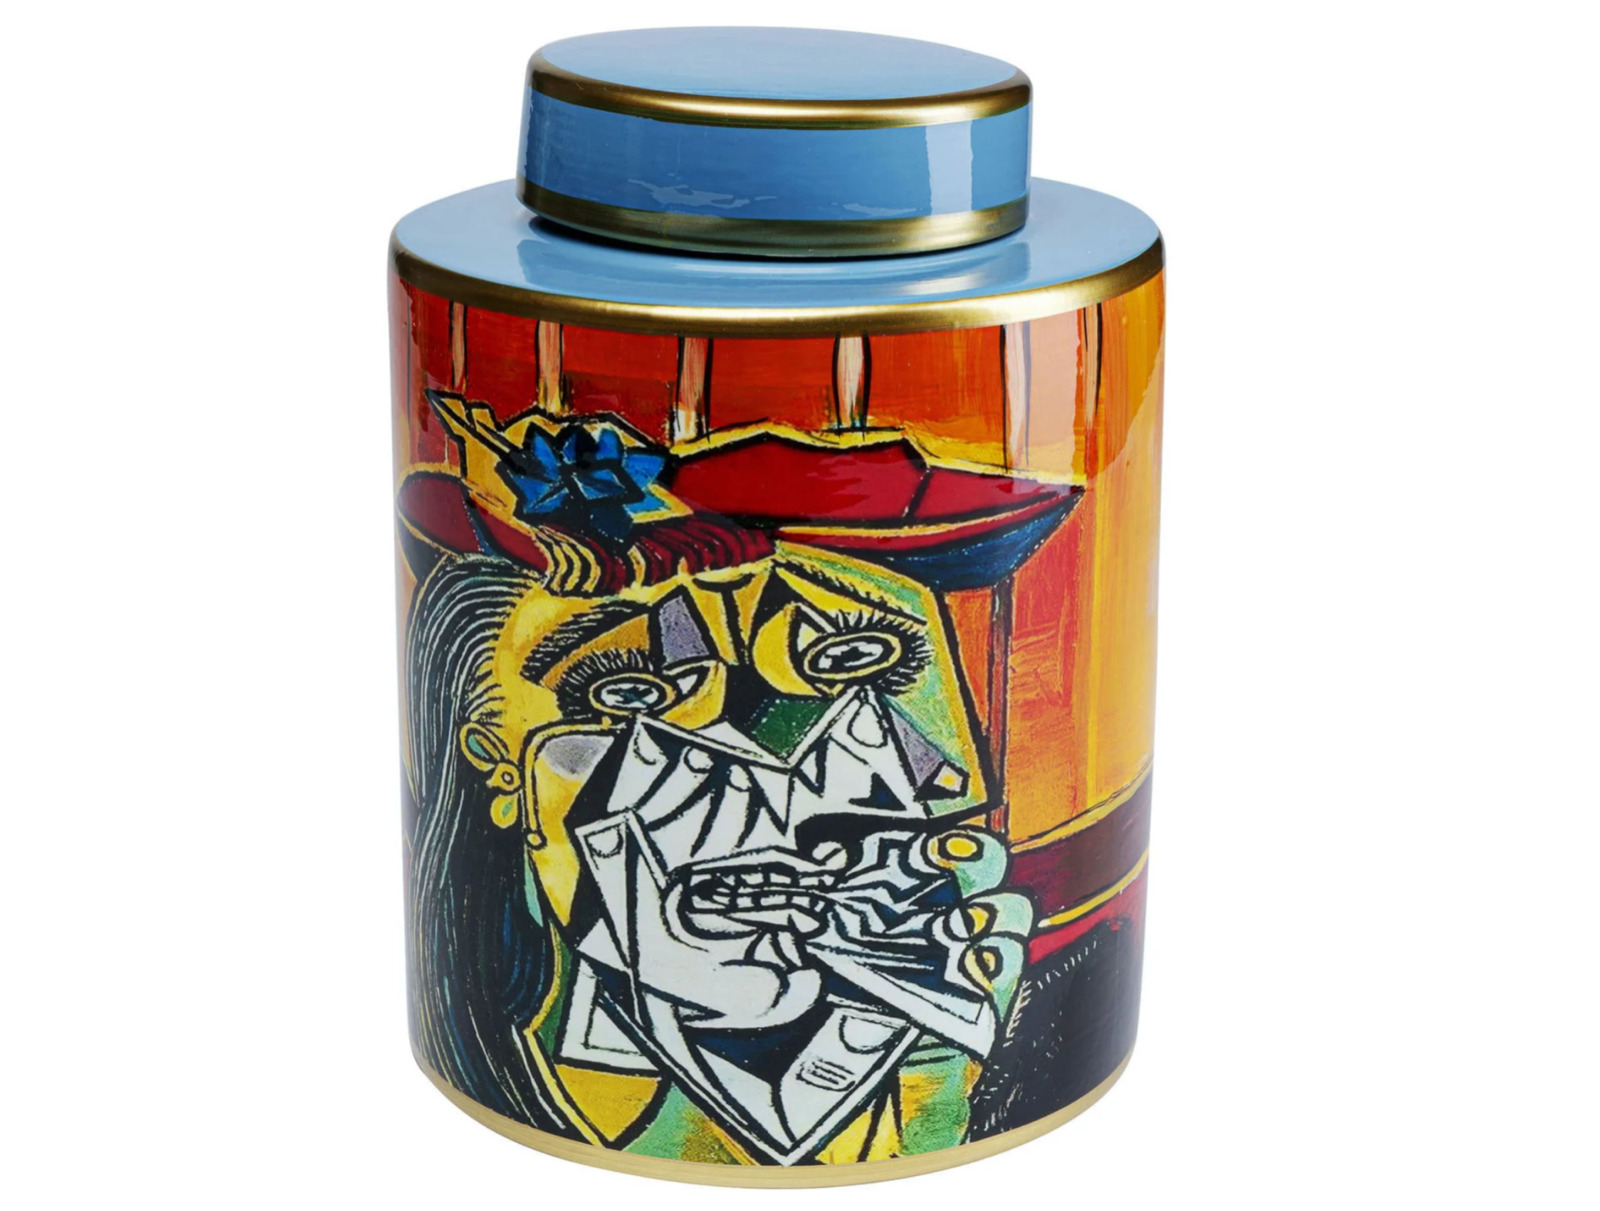 Porcelain Decorative Jar Graffiti Art Hand Painted Home Decor Interior Accent